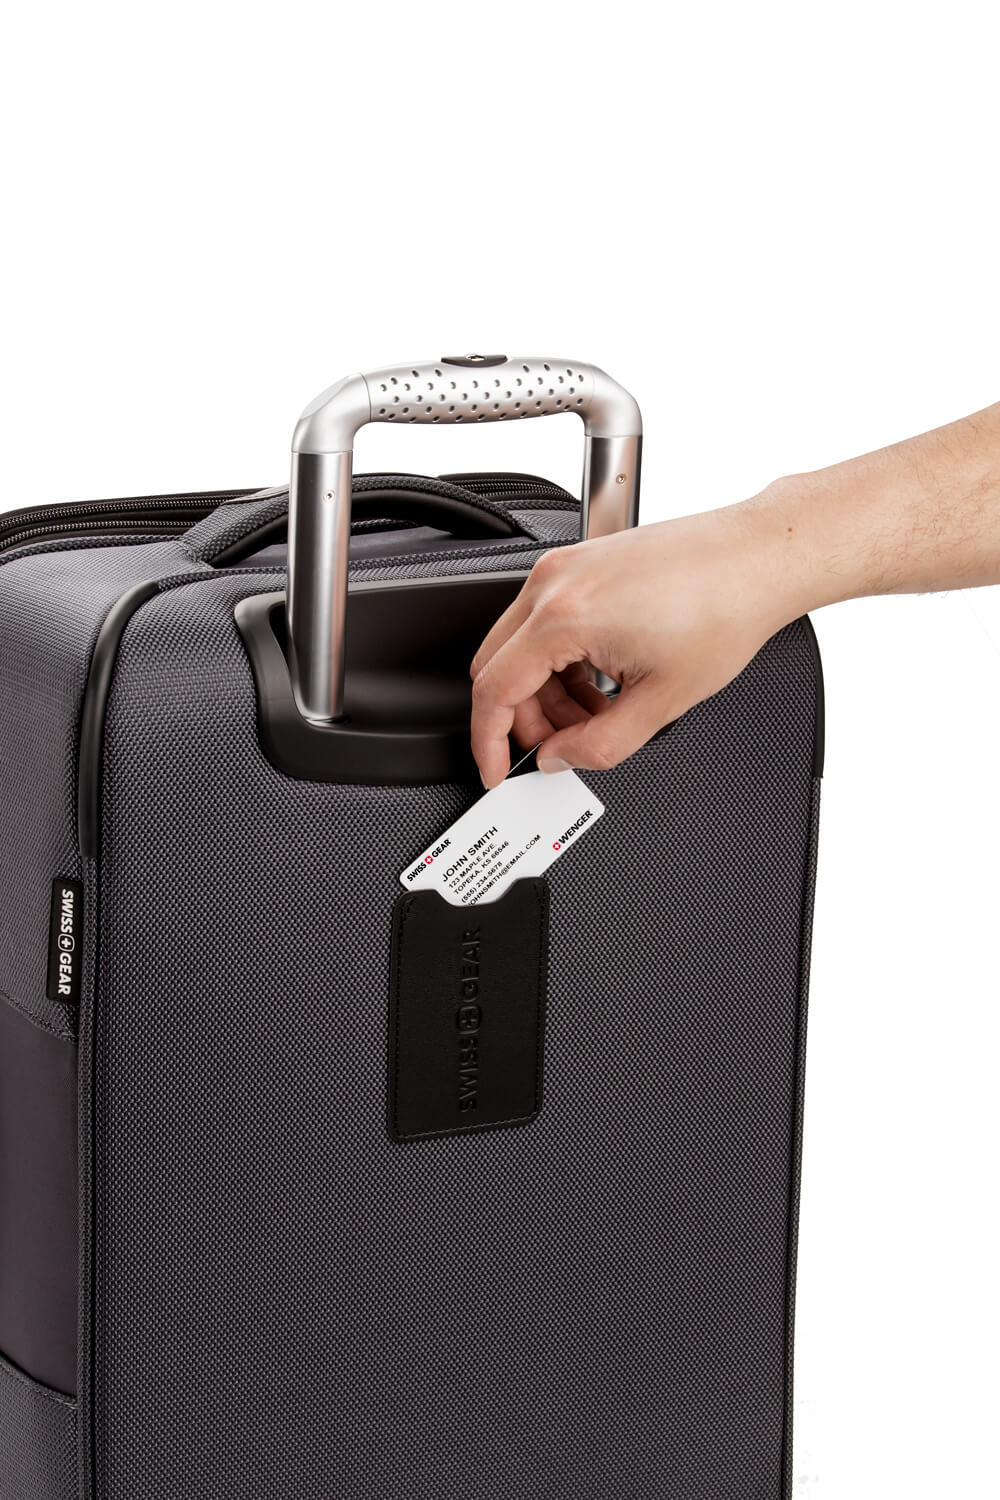 swissgear-personalized-luggage-tag-set-black-white